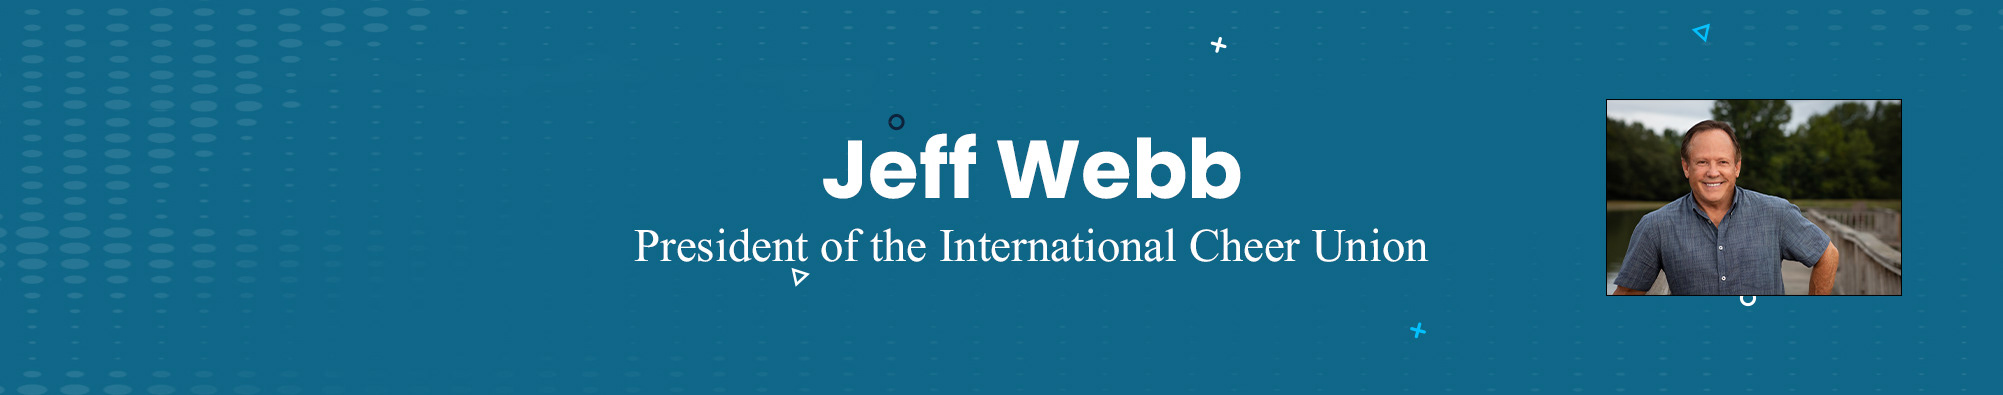 Jeff Webb's profile banner